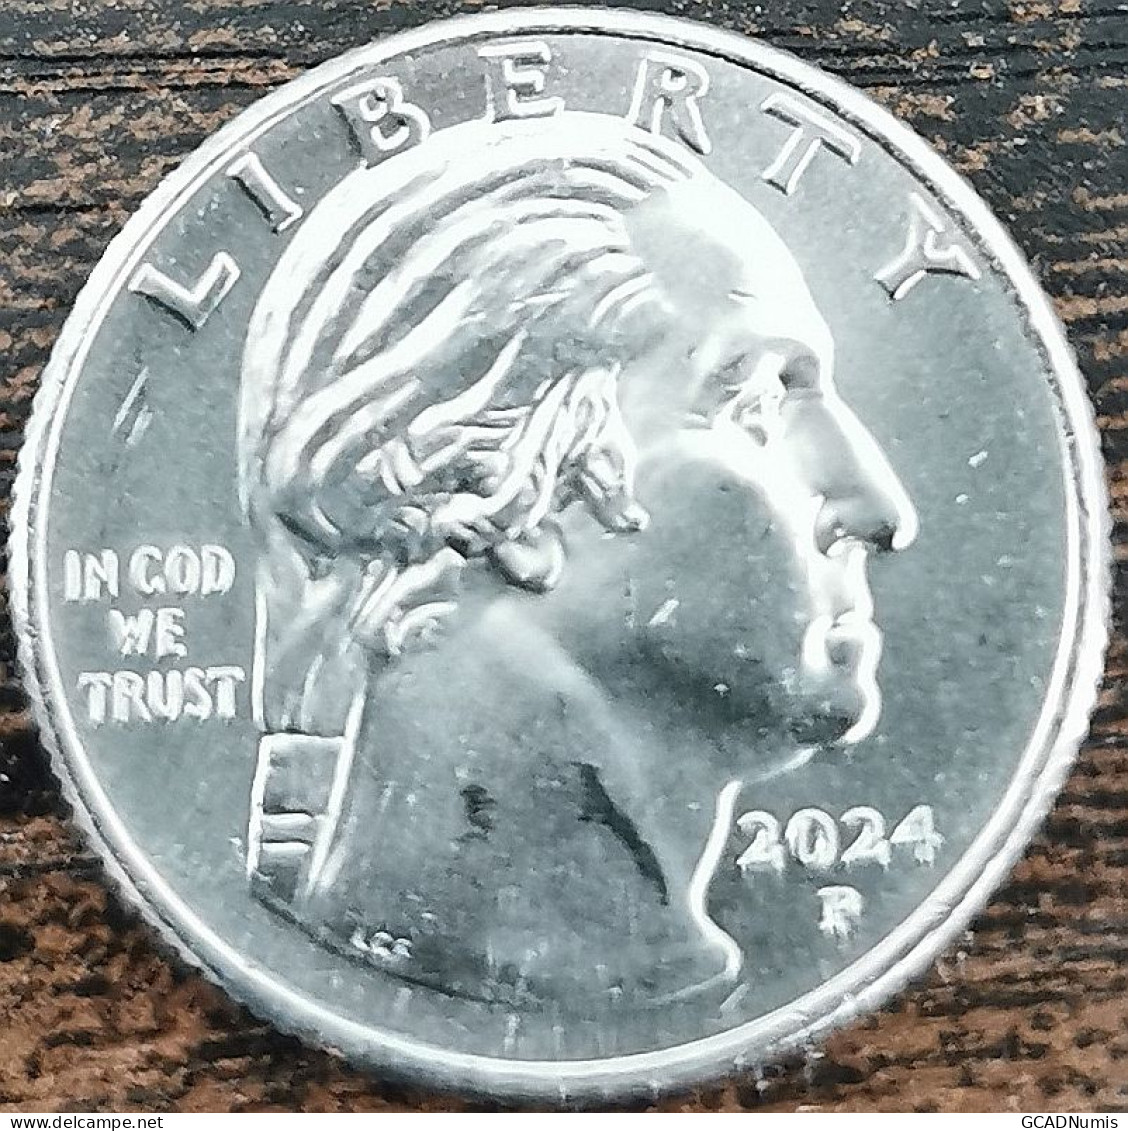 Quarter Dollar USA Patsy TAKEMOTO MINK - 2024 P - LIBERTY - American Woman - Non Classificati